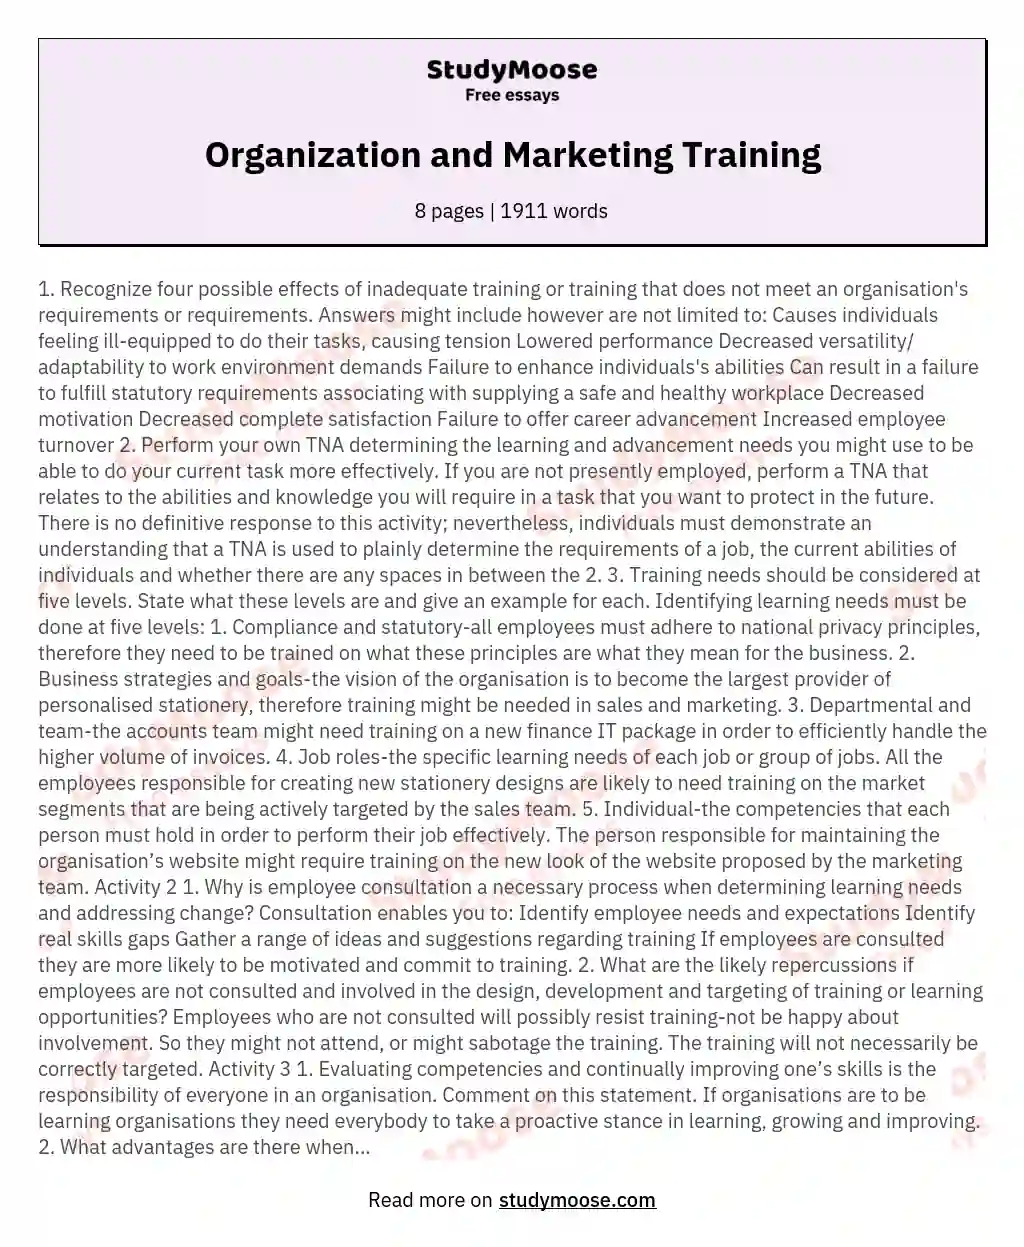 Organization and Marketing Training essay